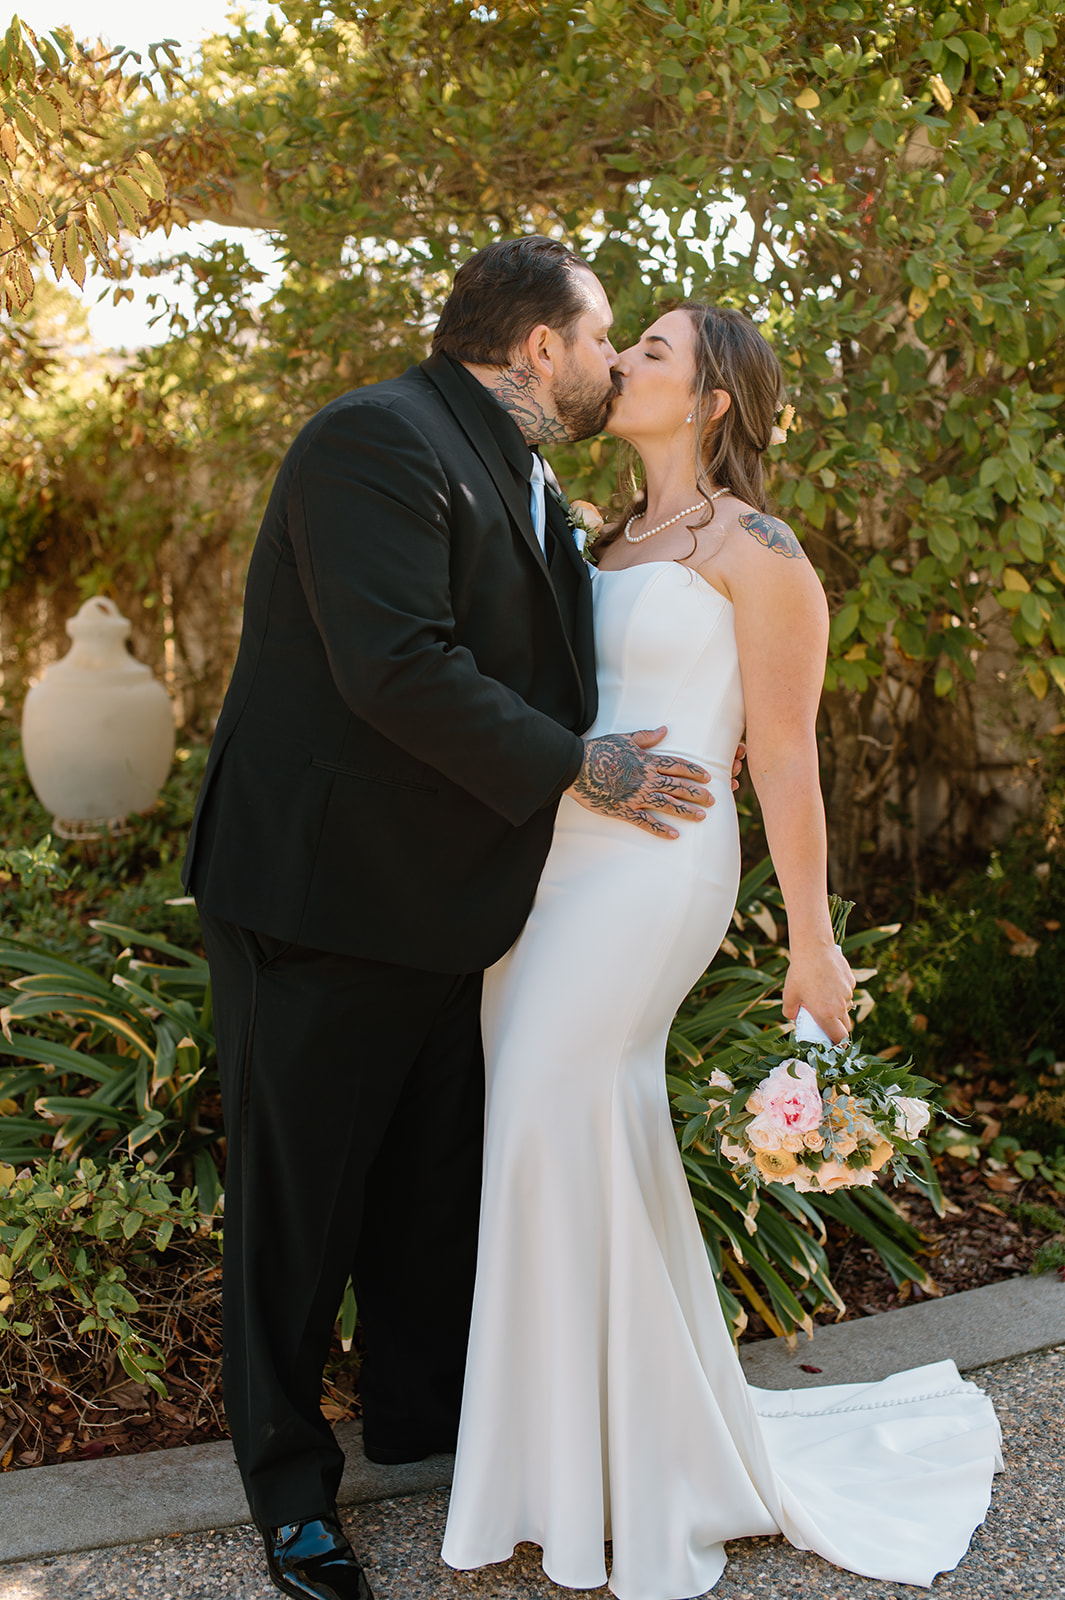 Sydney Jai Photography - Petaluma wedding, bride and groom photos